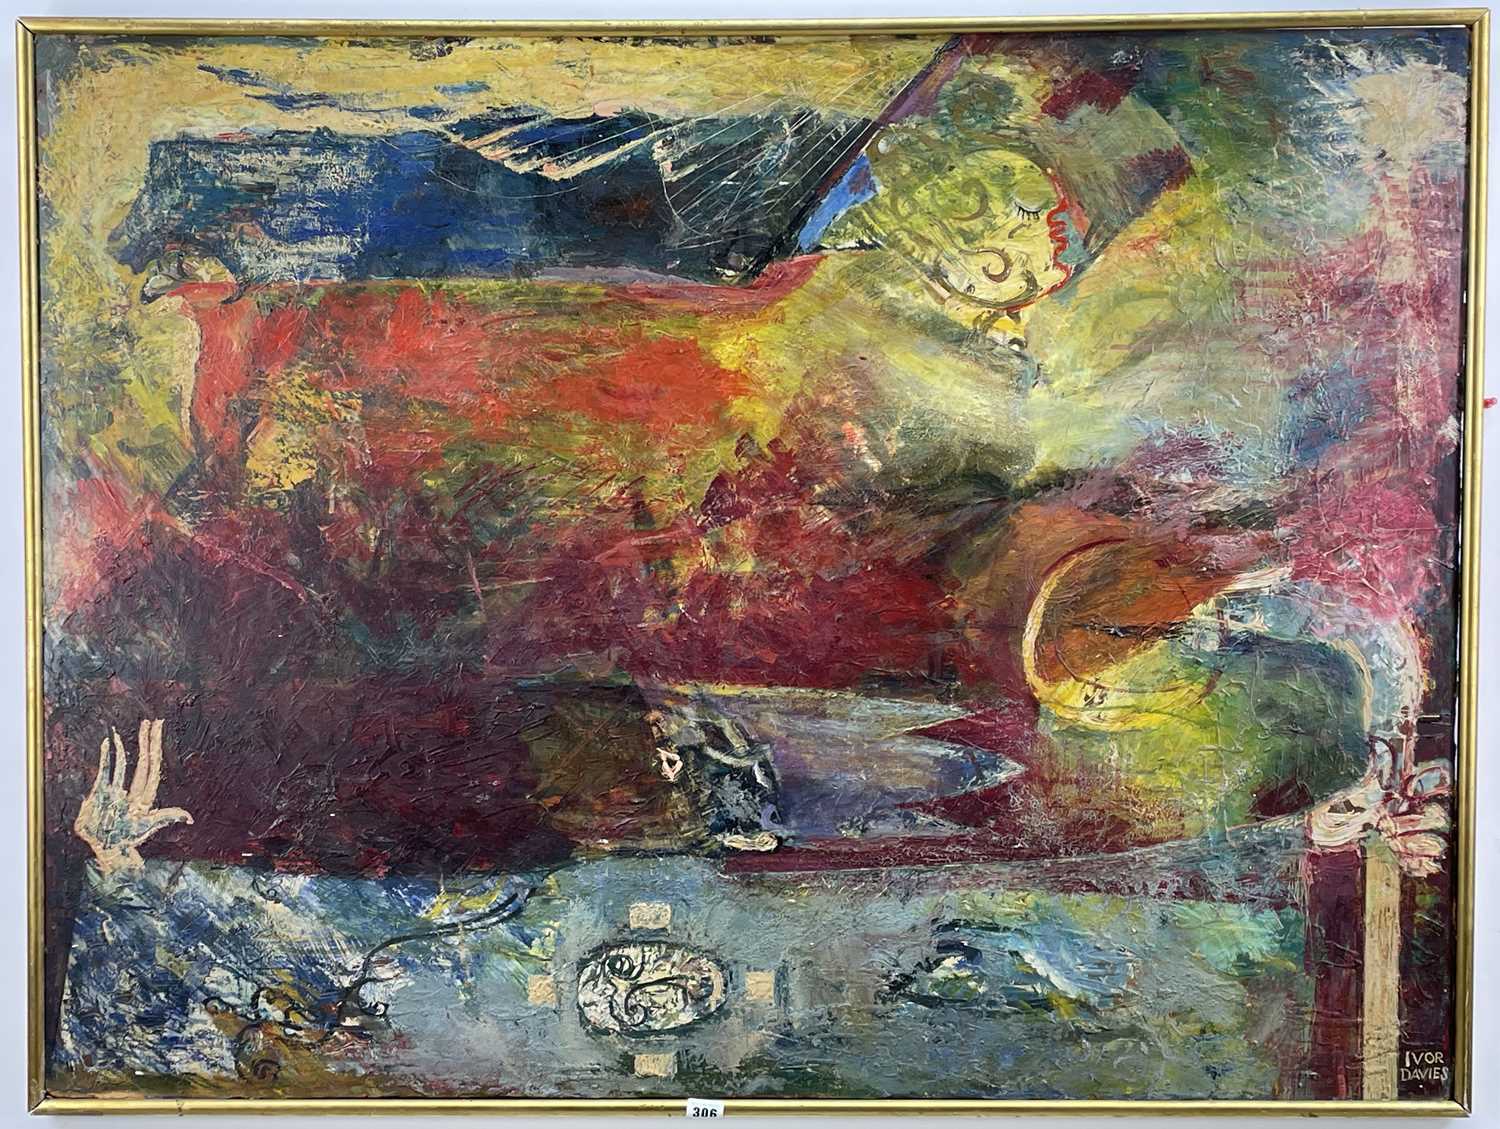 ‡ IVOR DAVIES oil on board - semi-abstract mythological landscape, signedDimensions: 92 x 122cms - Image 2 of 2